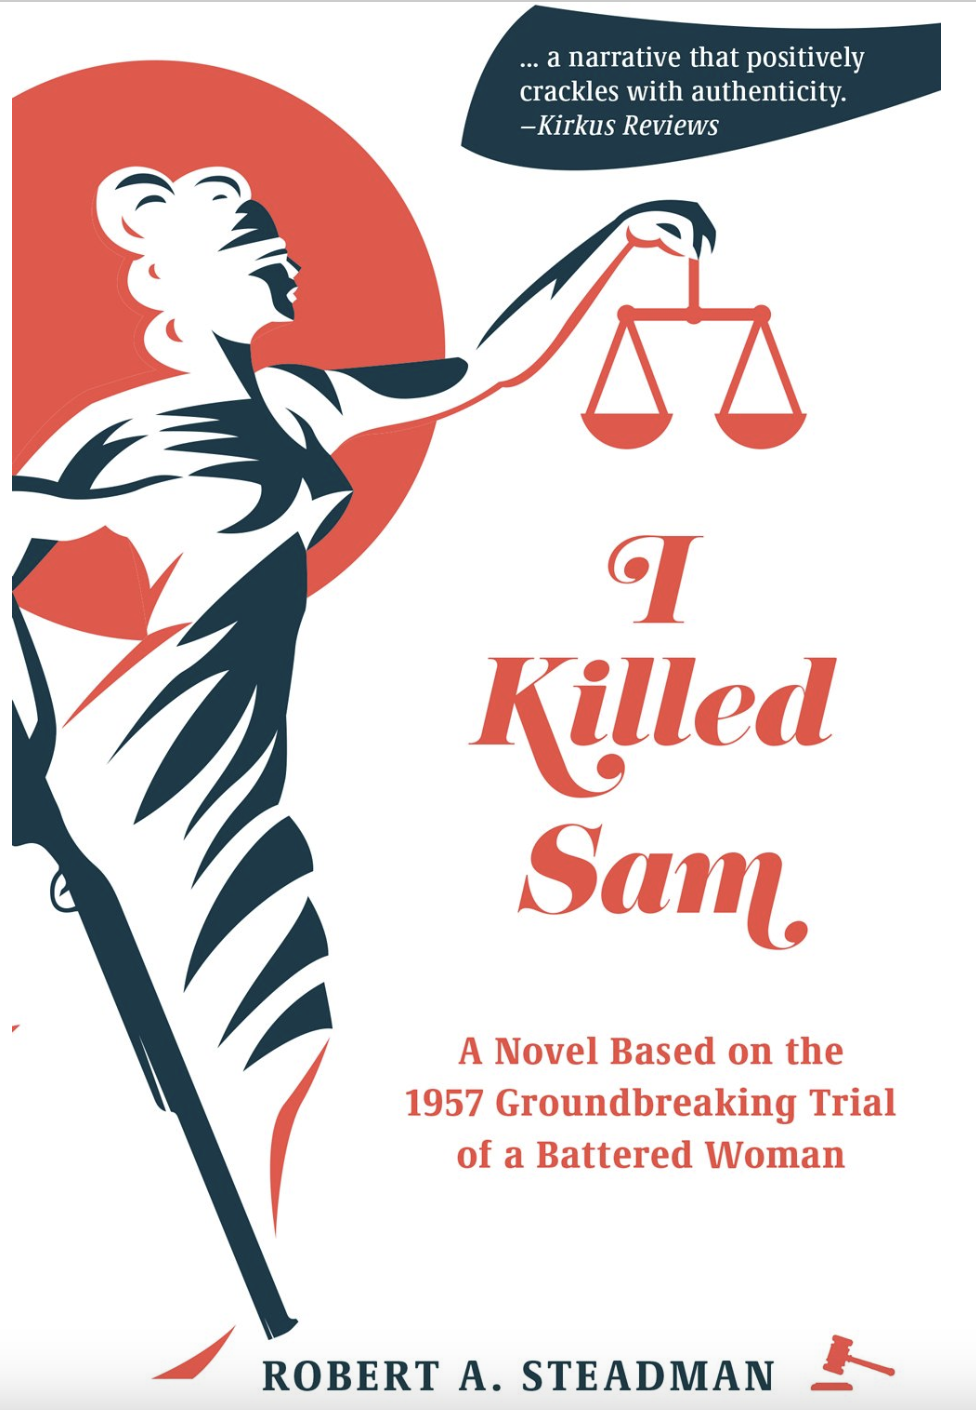 I Killed Sam  by Robert A. Steadman